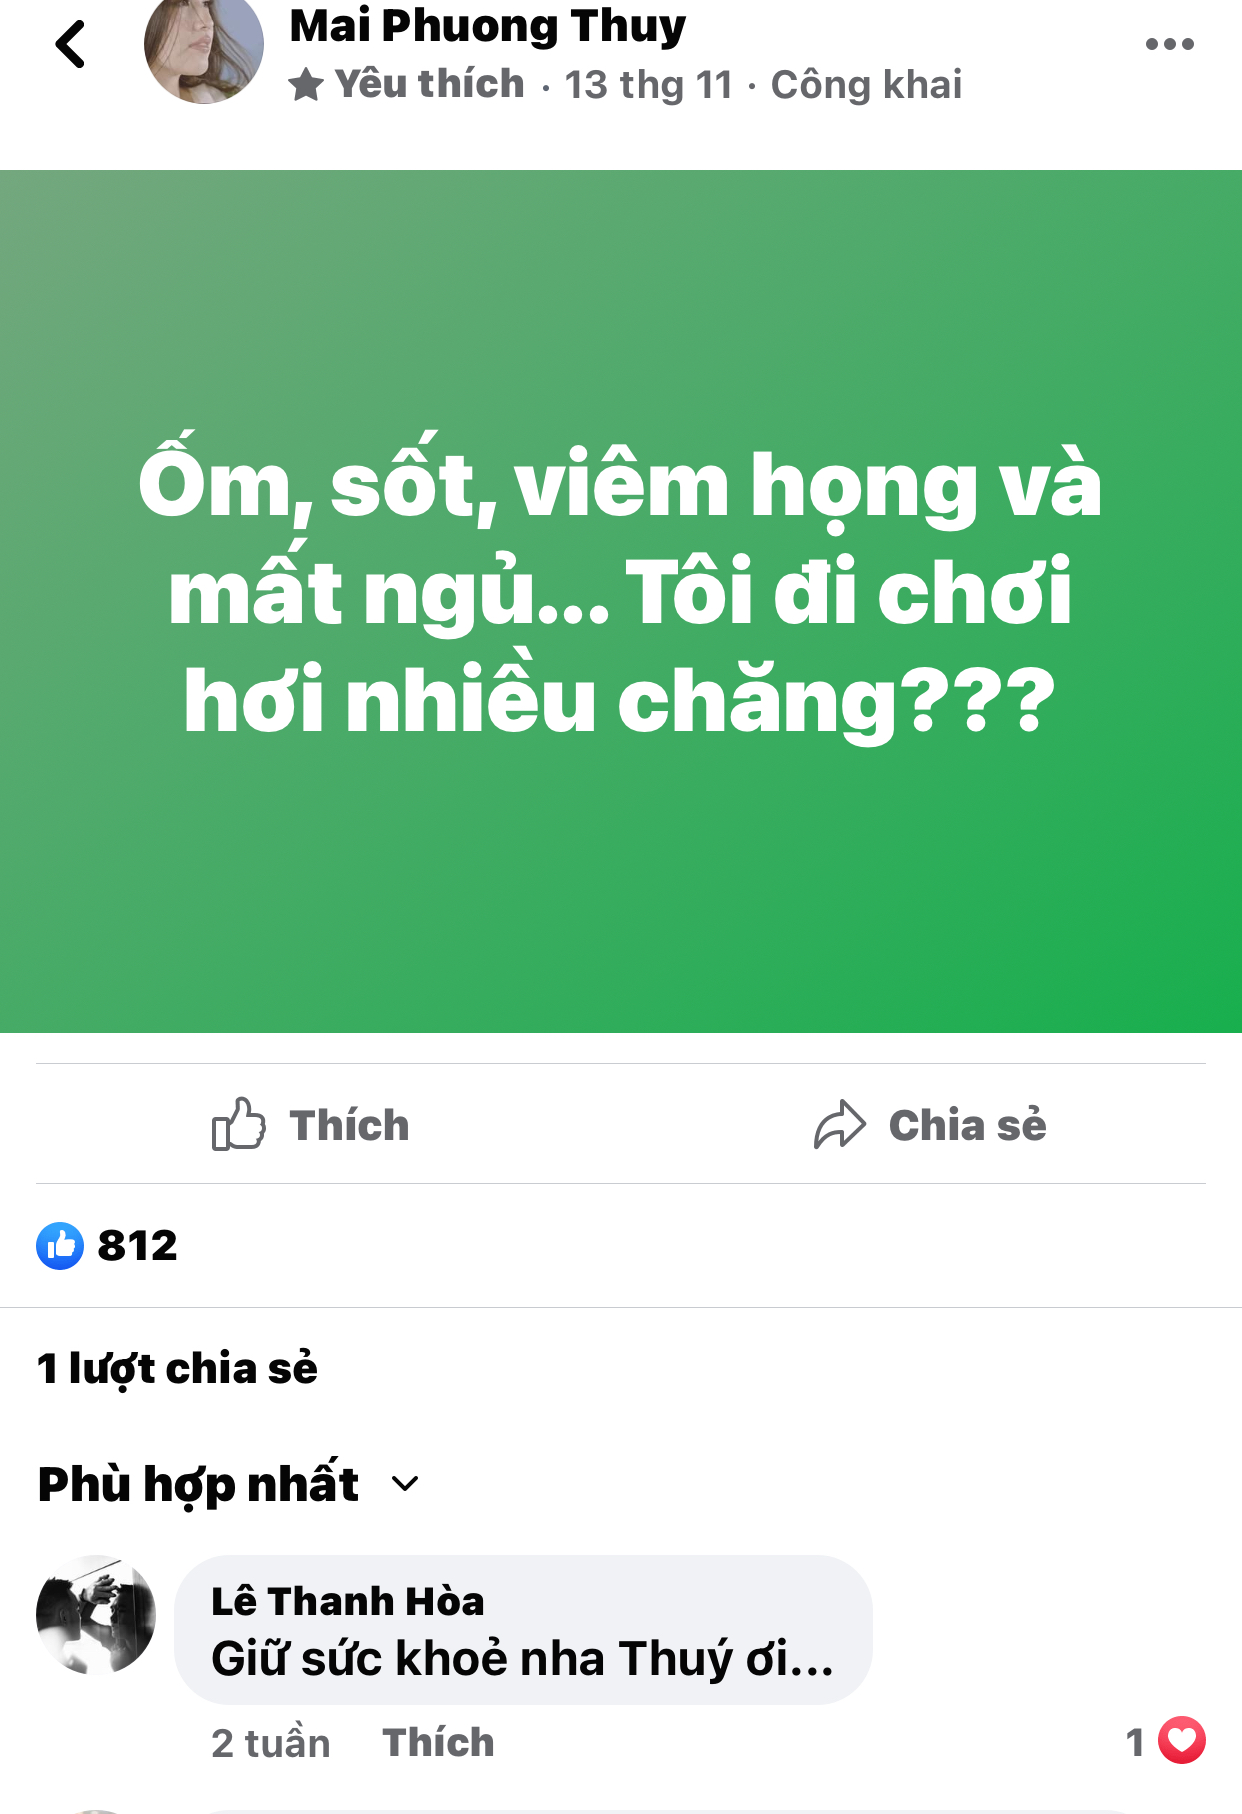 Mai-phuong-thuy-do-benh